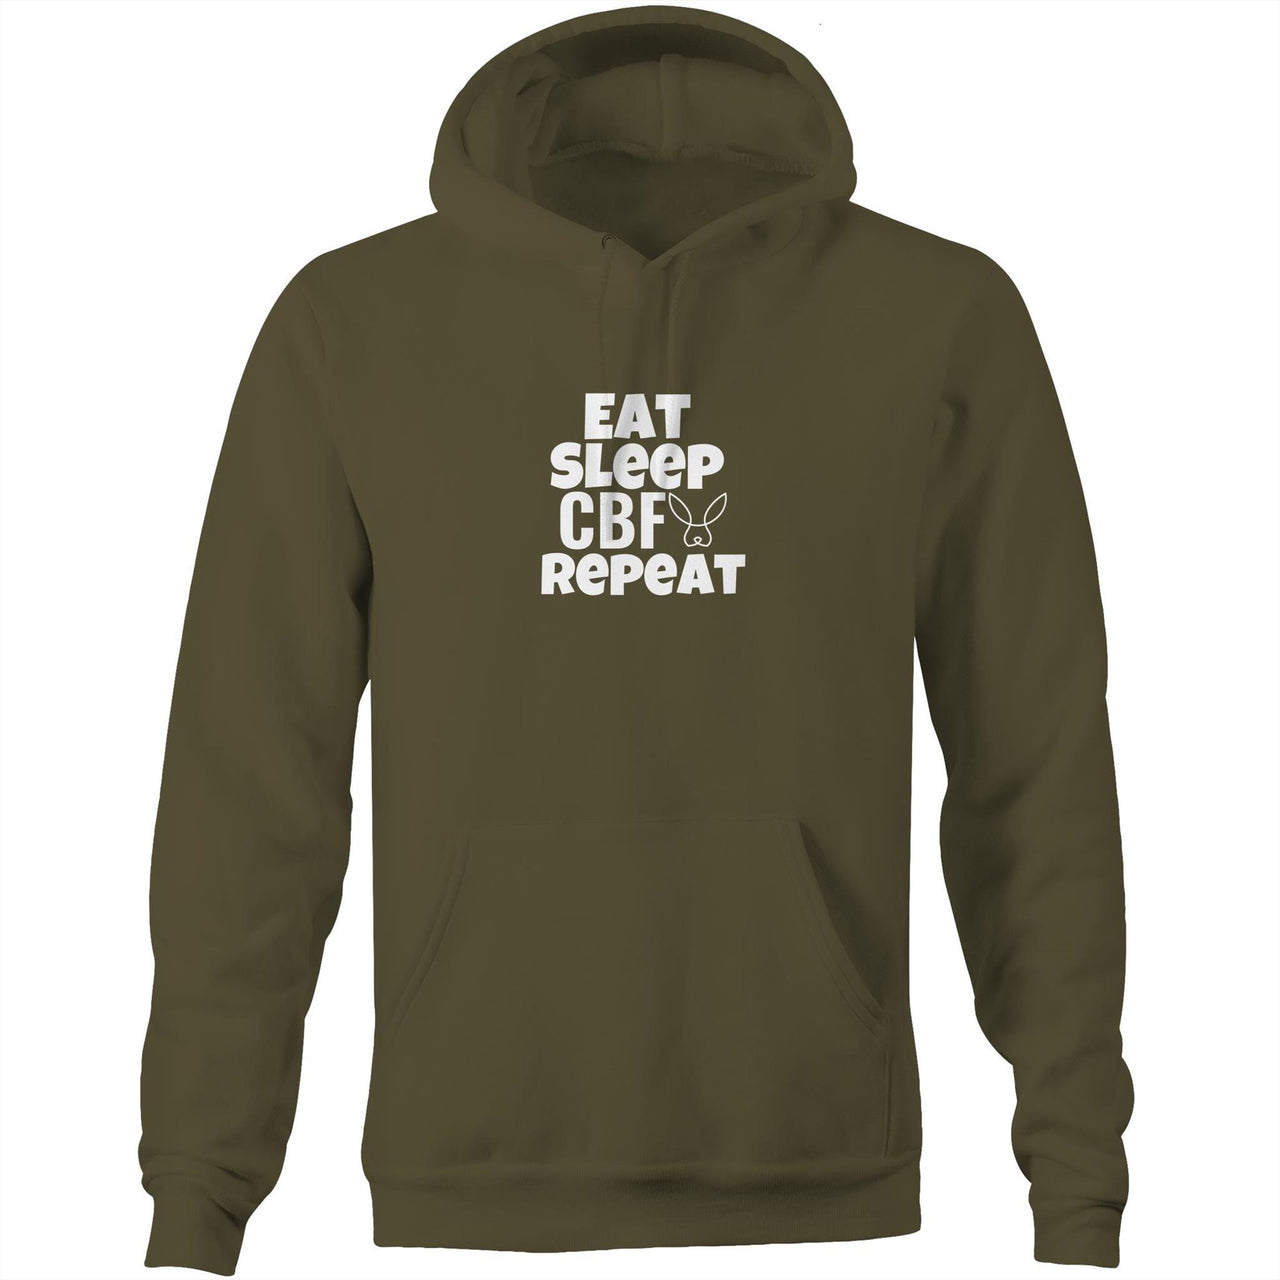 Eat Sleep CBF Repeat Pocket Hoodie Sweatshirt Army by CBF Clothing